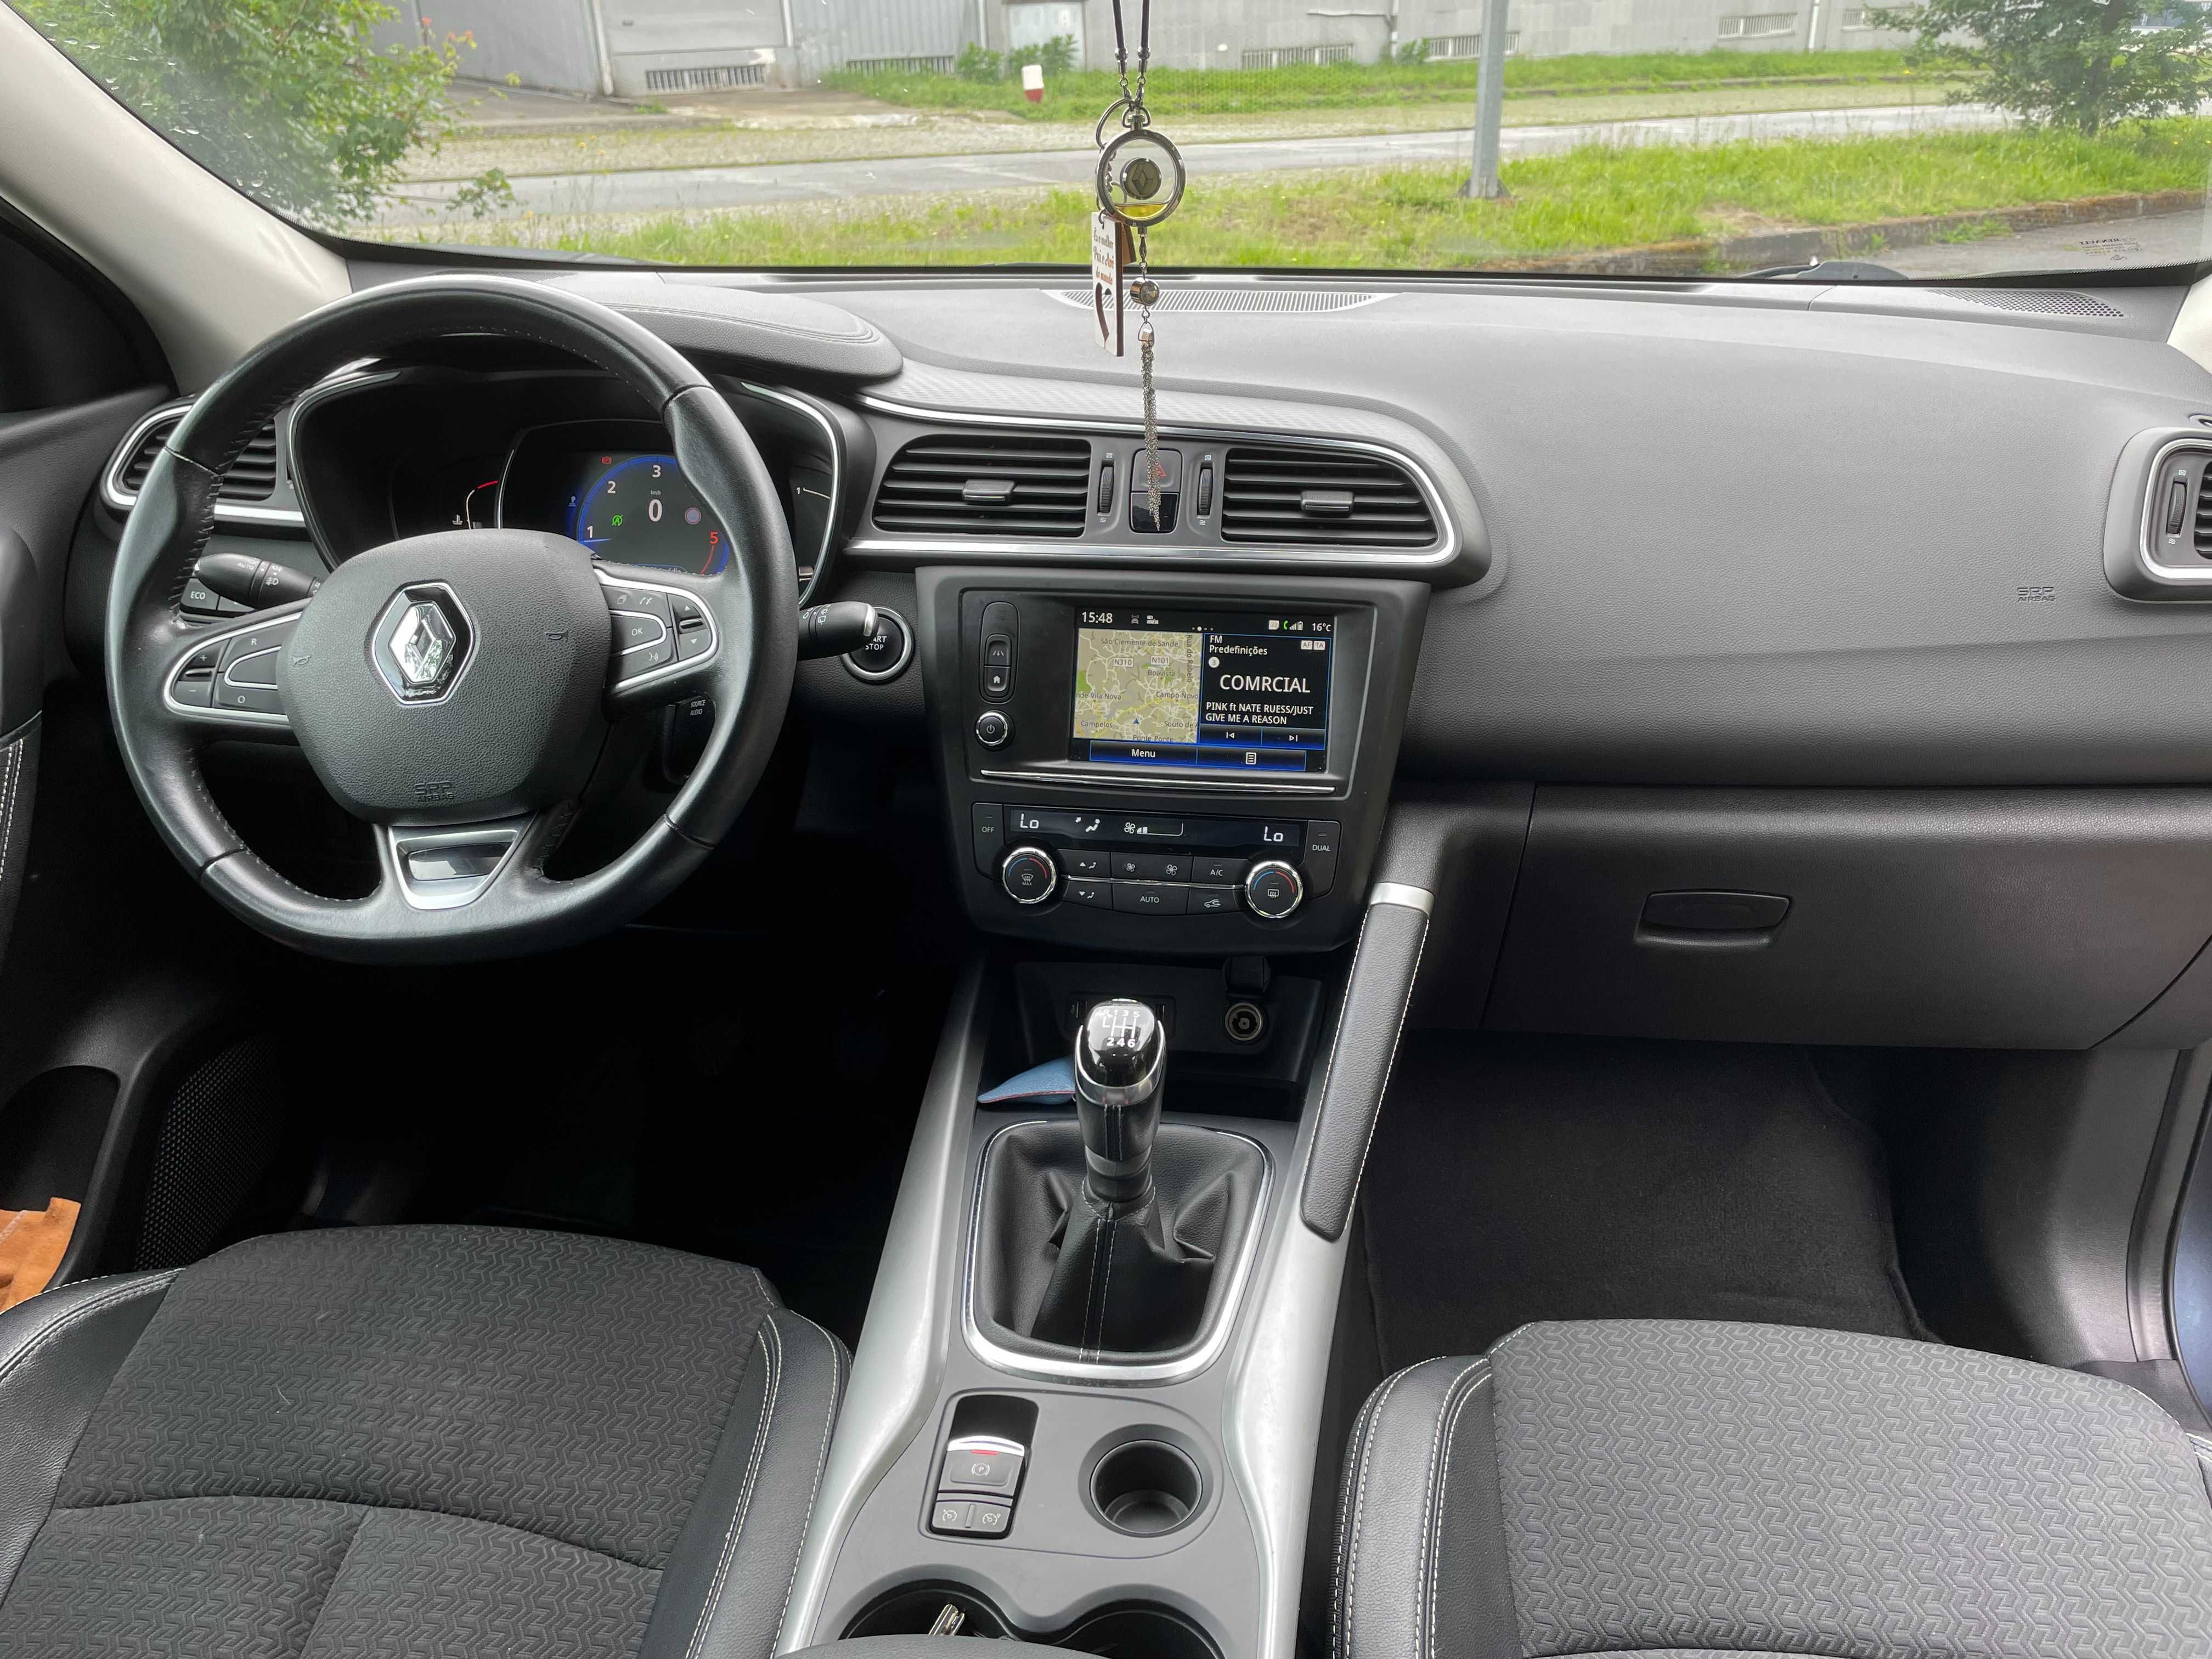 Renault KADJAR 1.5 dCi 110cv Exclusive - Full Extras